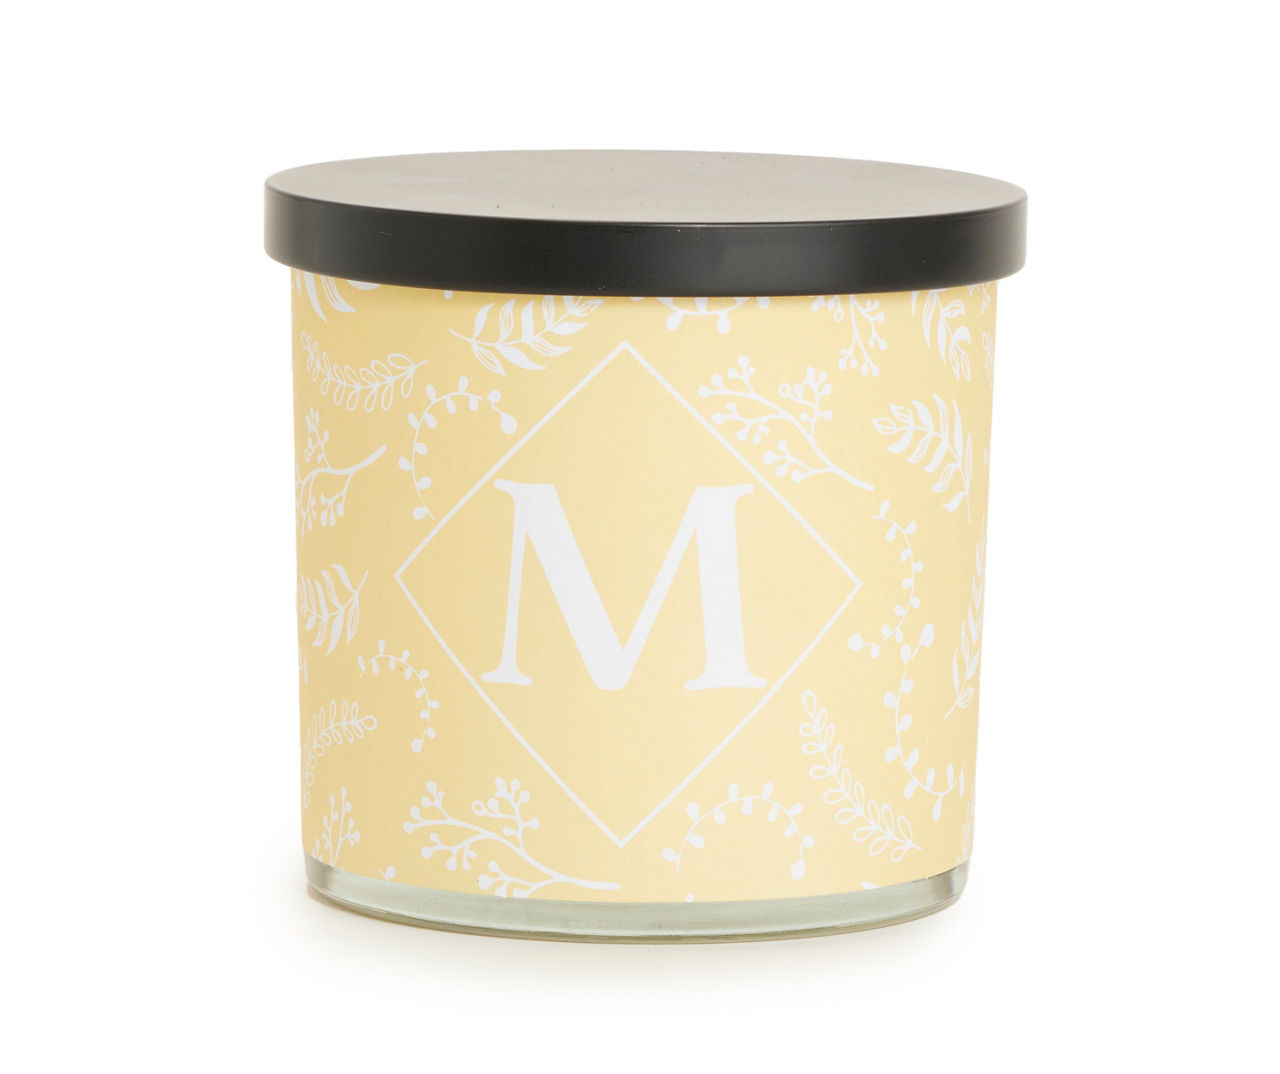 "M" Mandarin Honeysuckle Yellow & White Botanical Monogram Jar Candle, 14 oz.